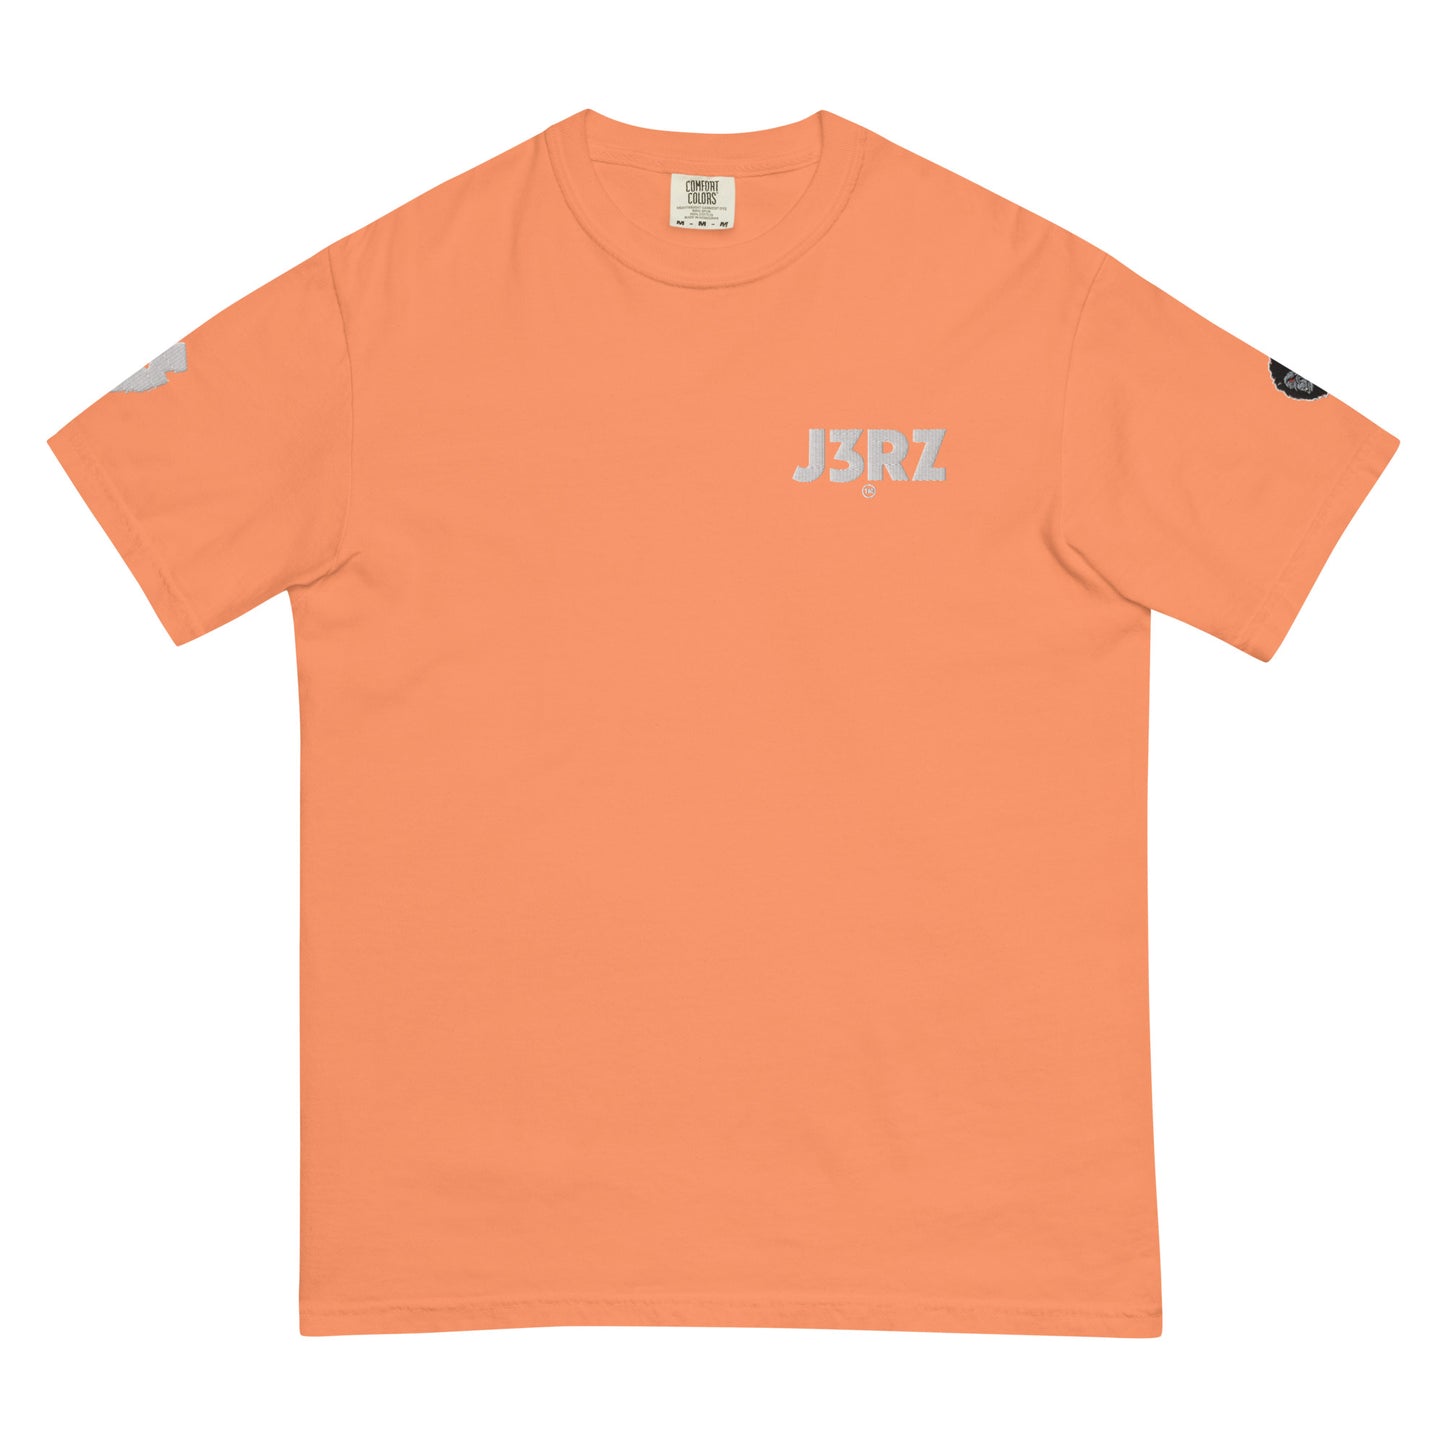 BigSmoke Soprano Clothing: J3RZ Tee